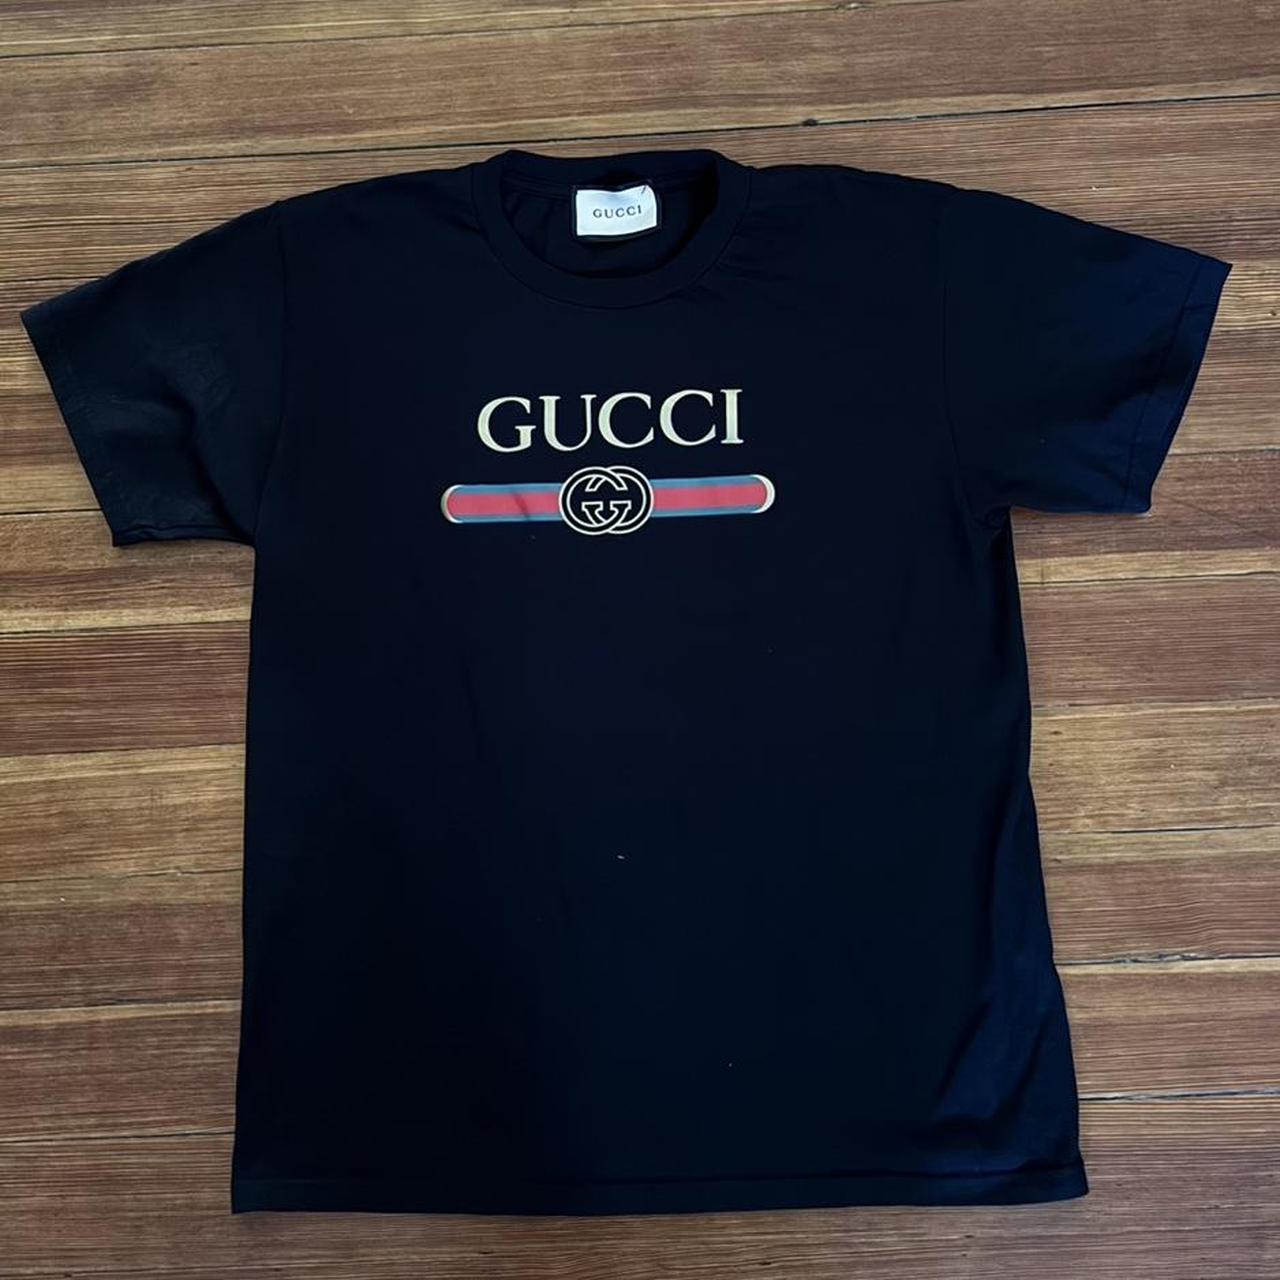 Gucci Men's Black T-shirt